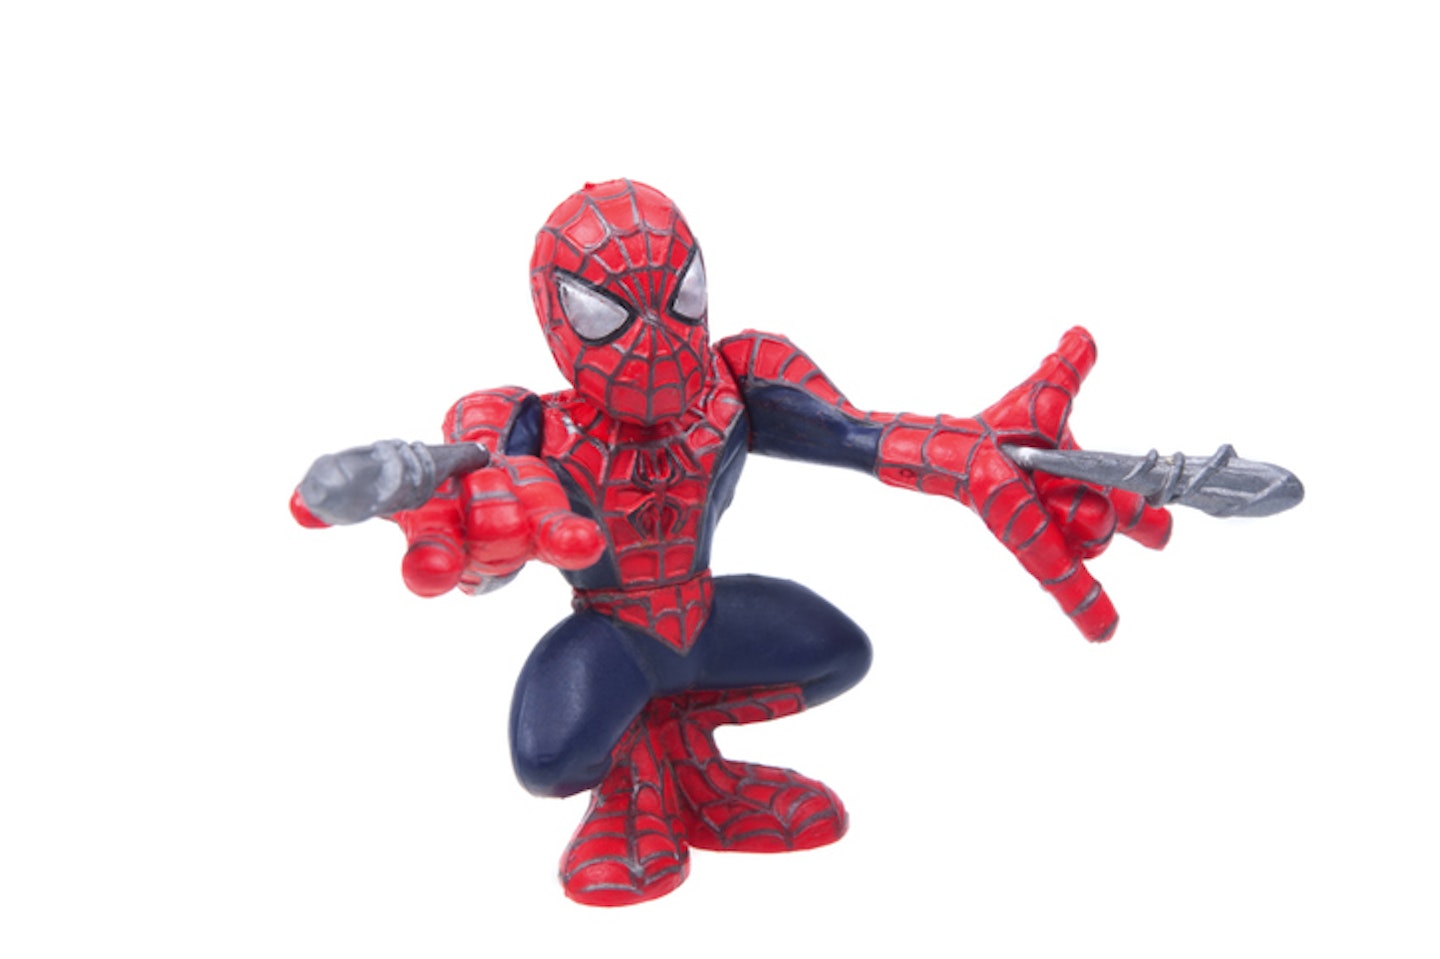 Spiderman toys for kids